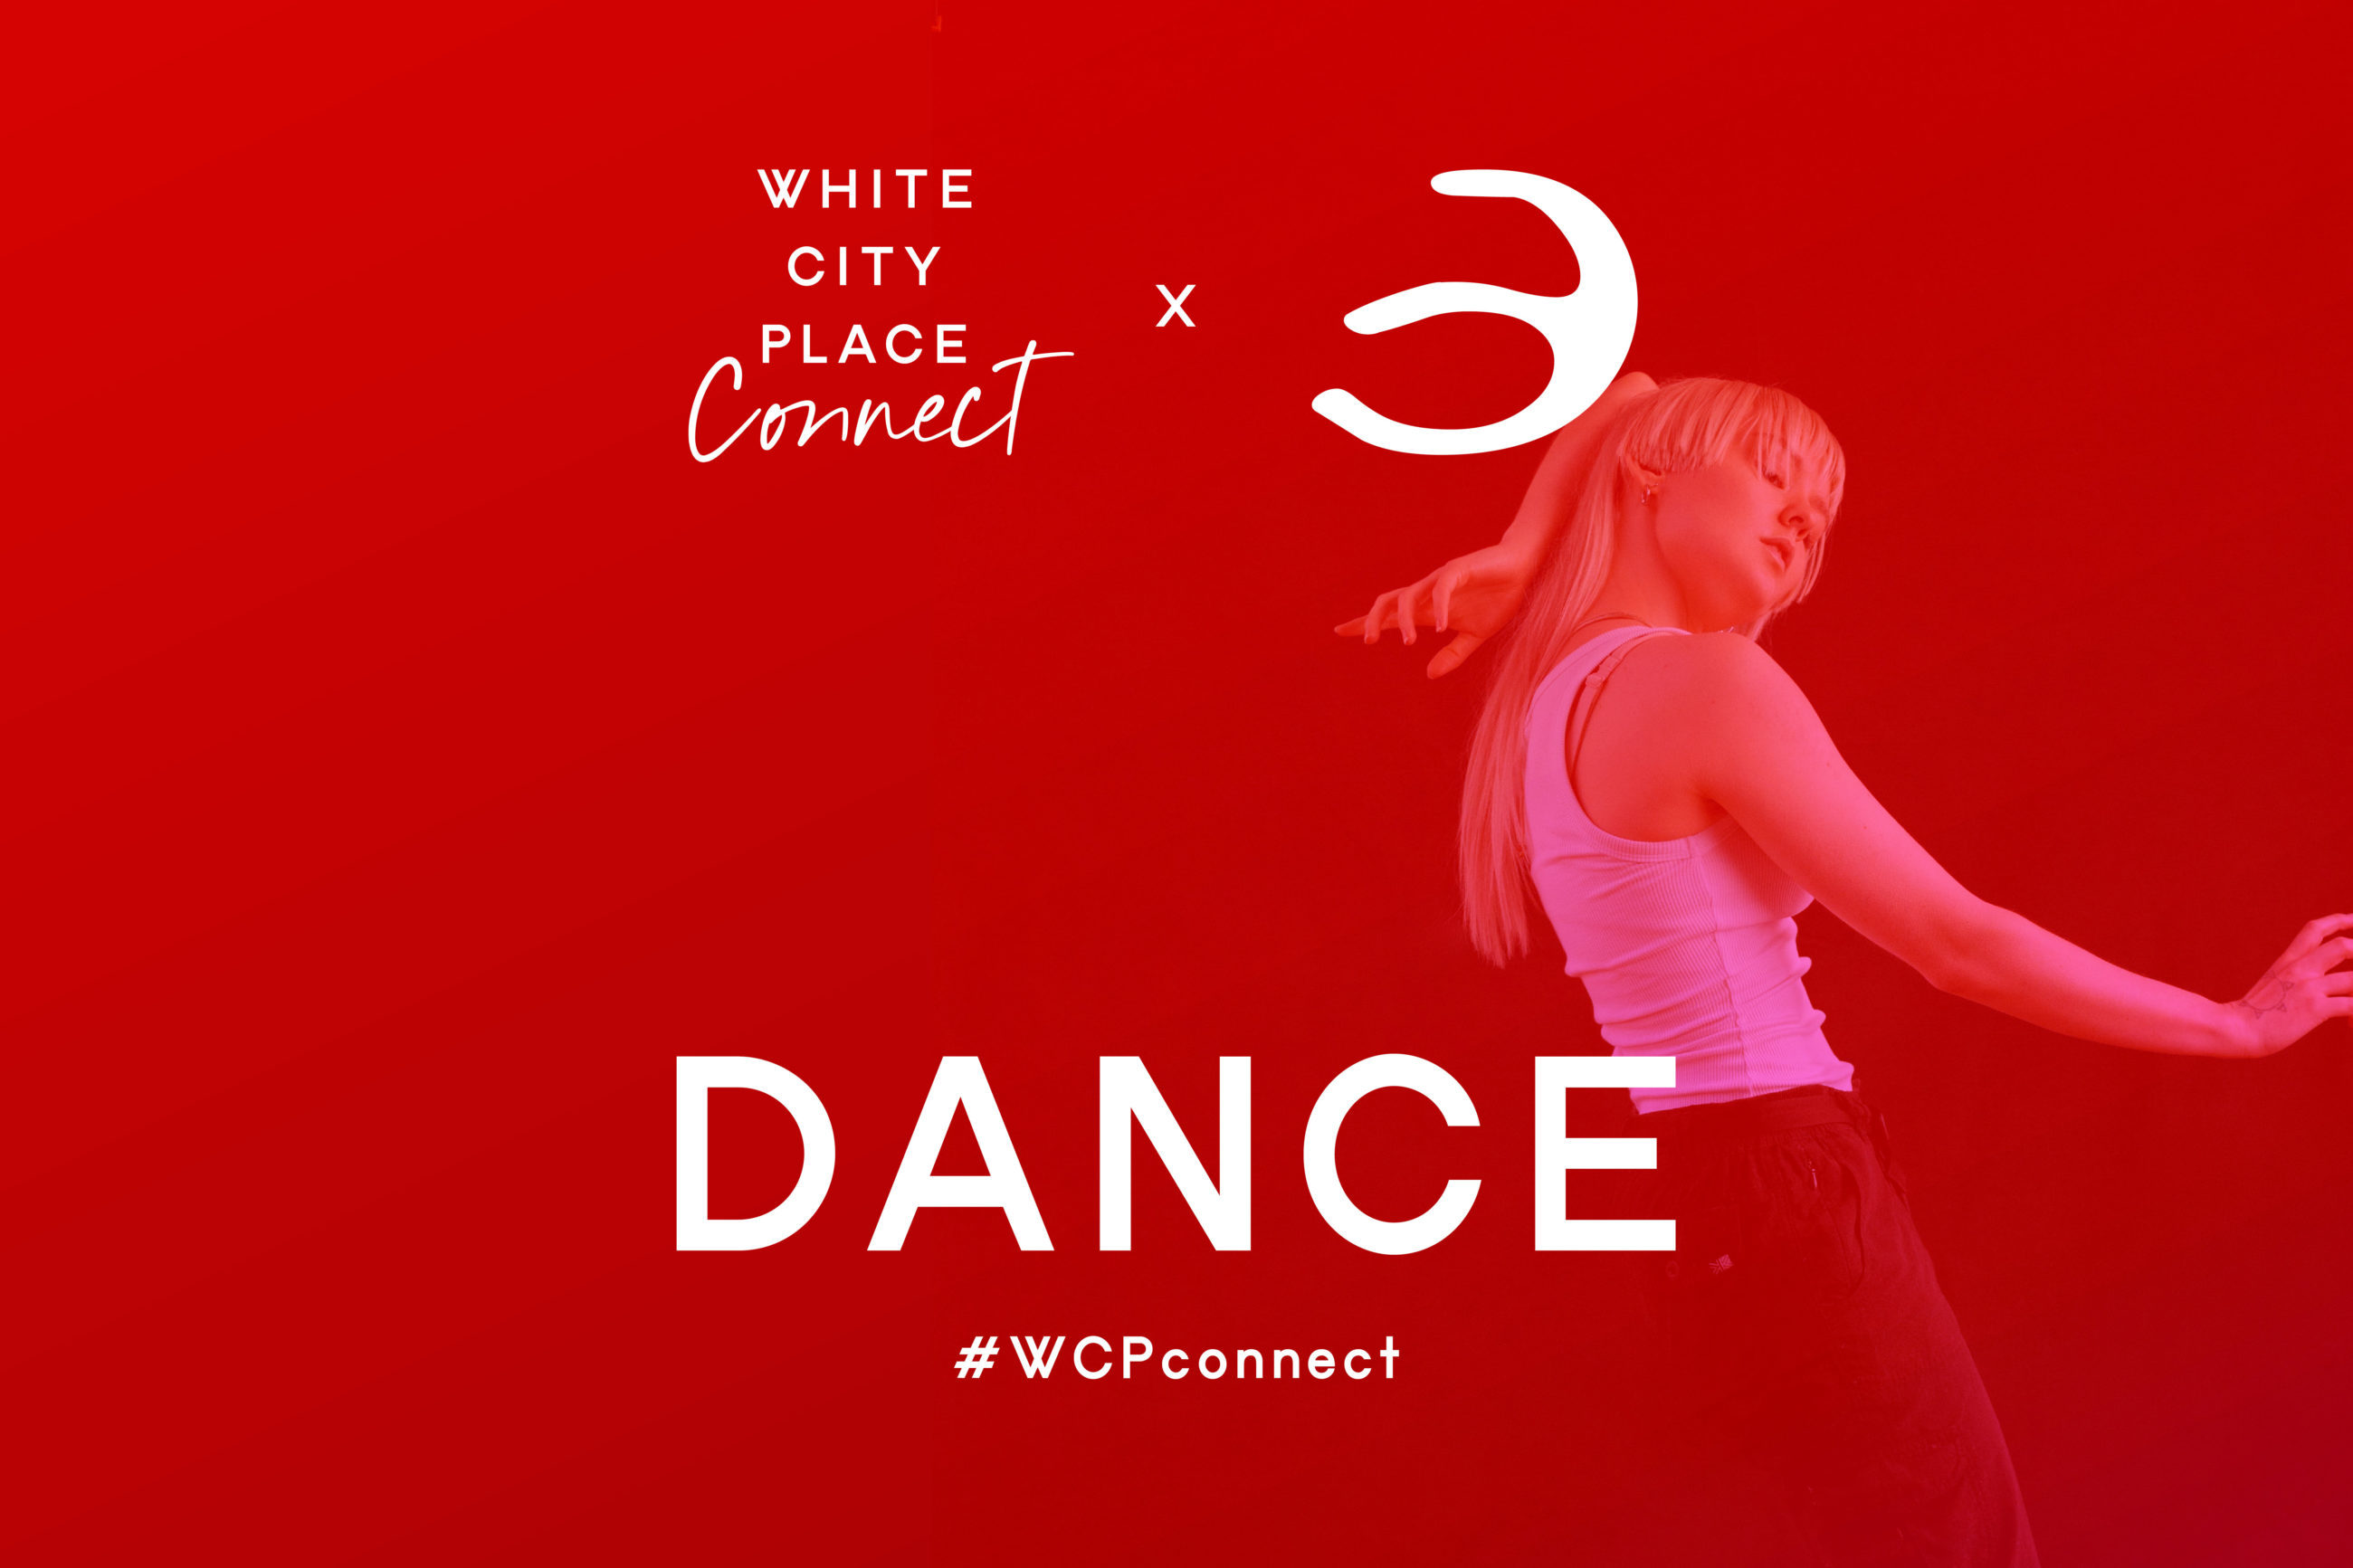 White City Place Connect: Dance Feature Image